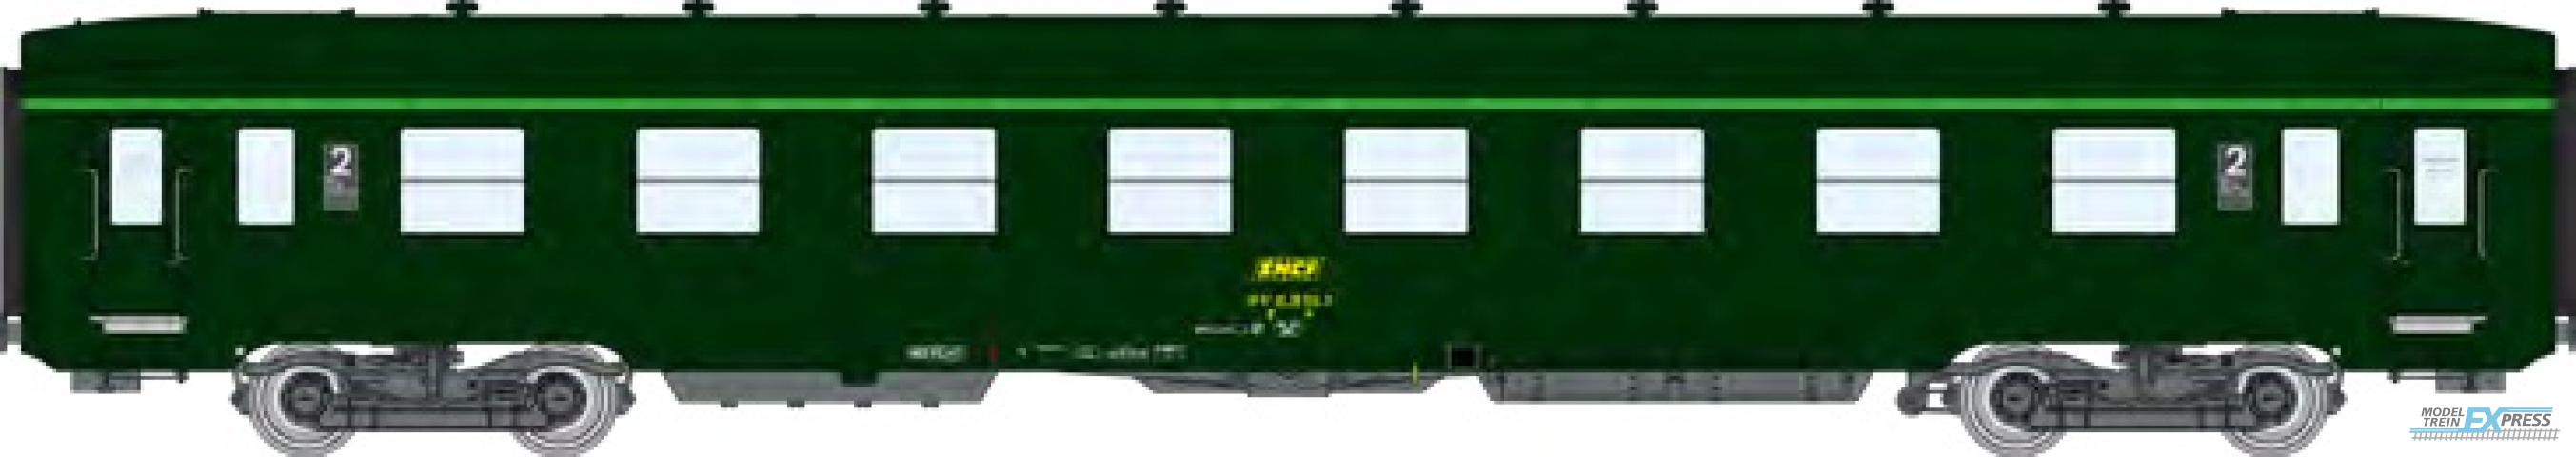 REE models VB-397 DEV AO short, B8 ex-A8 U53 green 302 Era IV-V